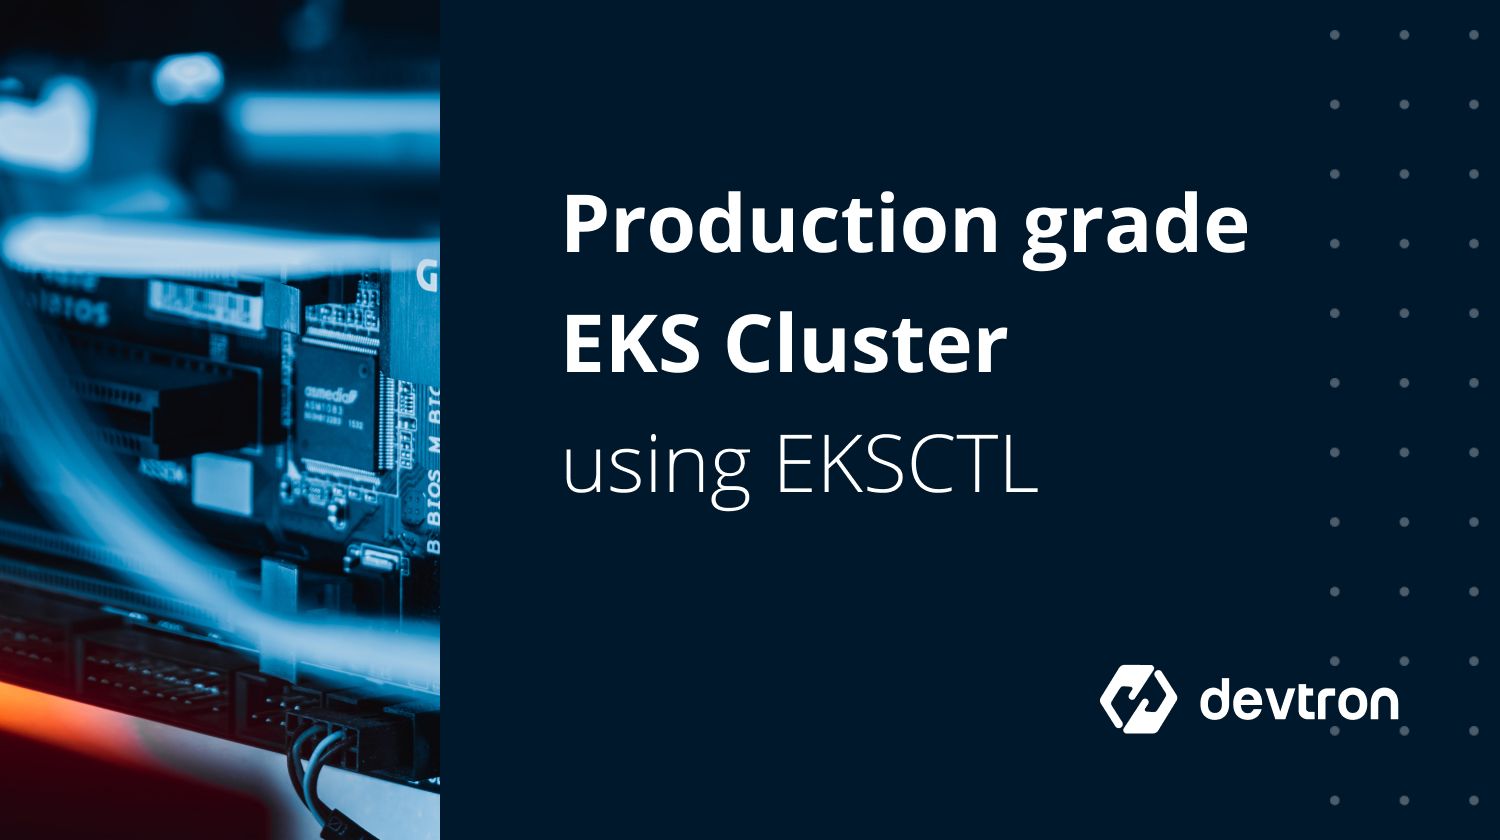 Creating a Production grade EKS Cluster using EKSCTL